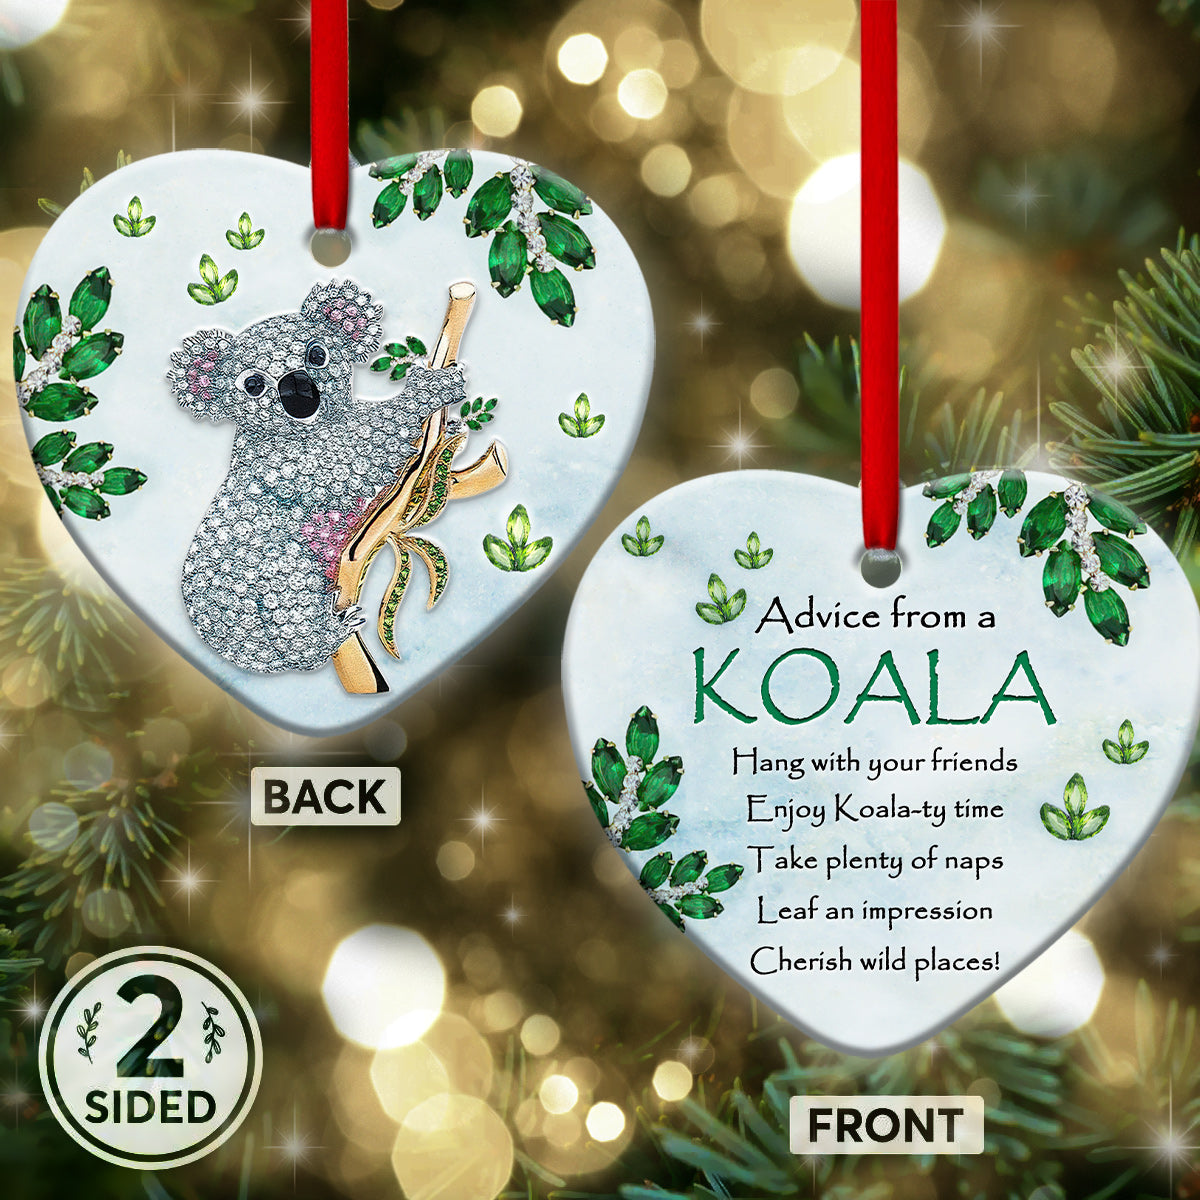 Koala Advice Heart Ornament - Christmas Ornament - Ciaocustom